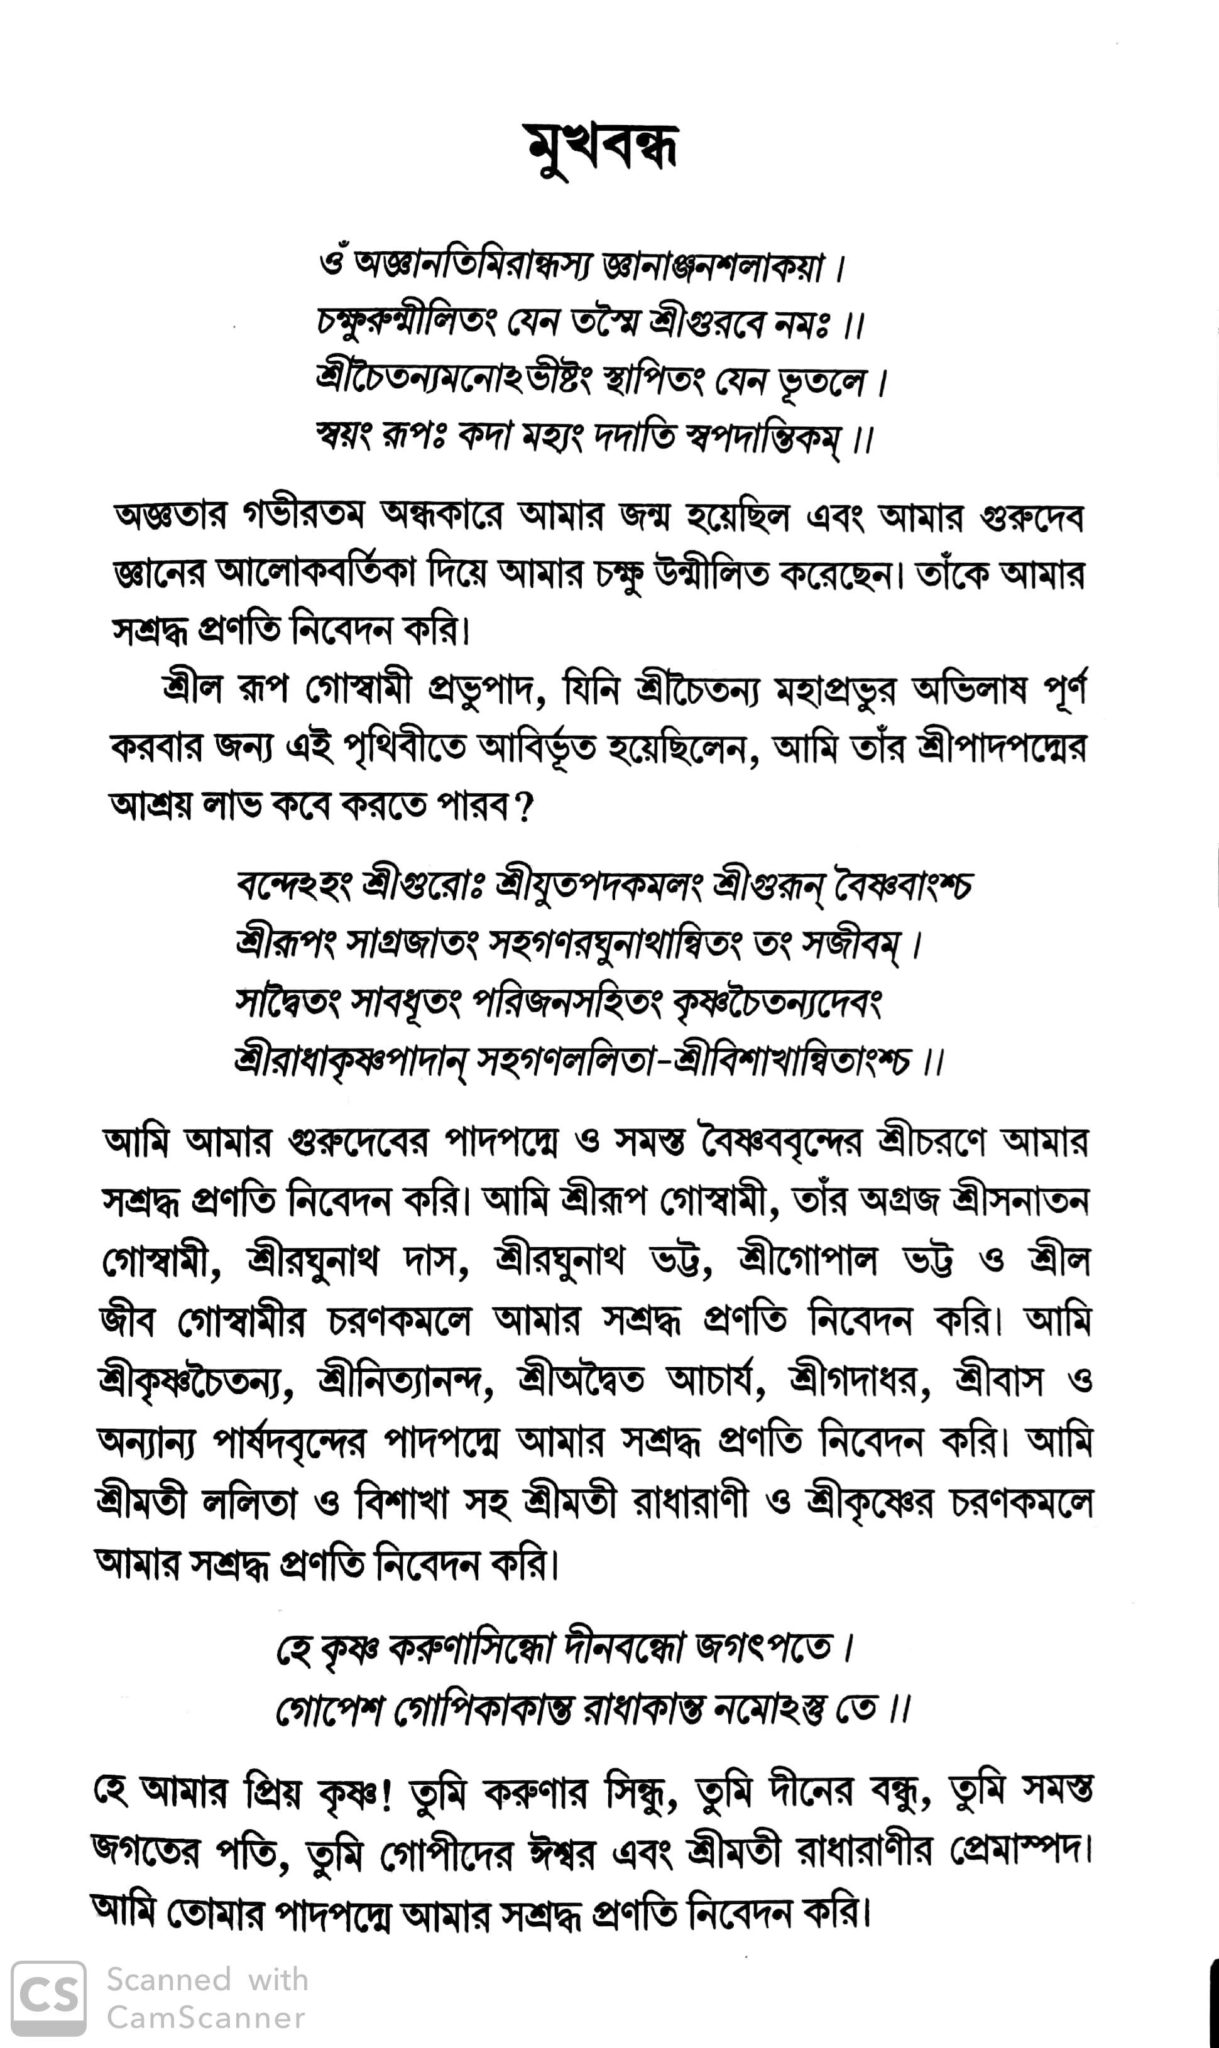 shrimad bhagwat gita in bengali pdf